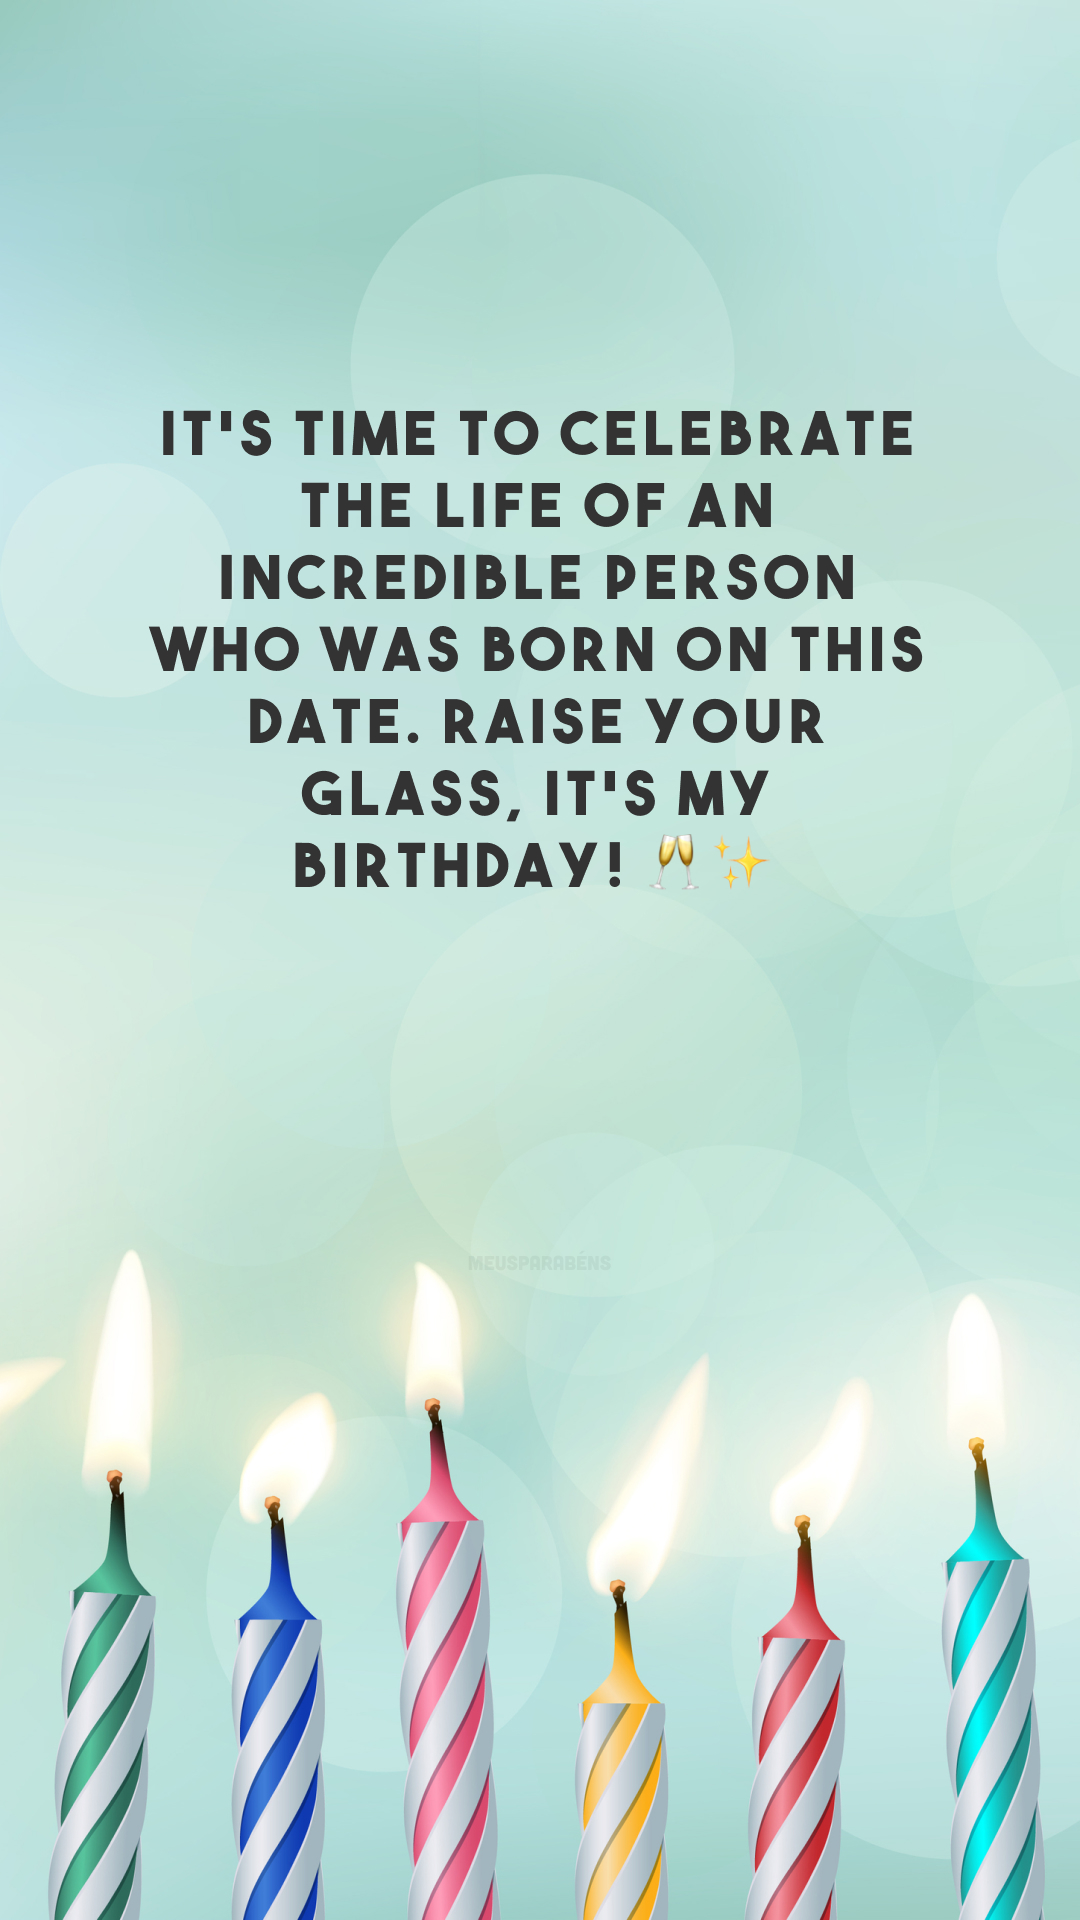 It's time to celebrate the life of an incredible person who was born on this date. Raise your glass, It's my birthday! 🥂✨

<p>(É hora de celebrar a vida de uma pessoa incrível que nasceu nesta data. Levante seu copo, é meu aniversário!)<p>